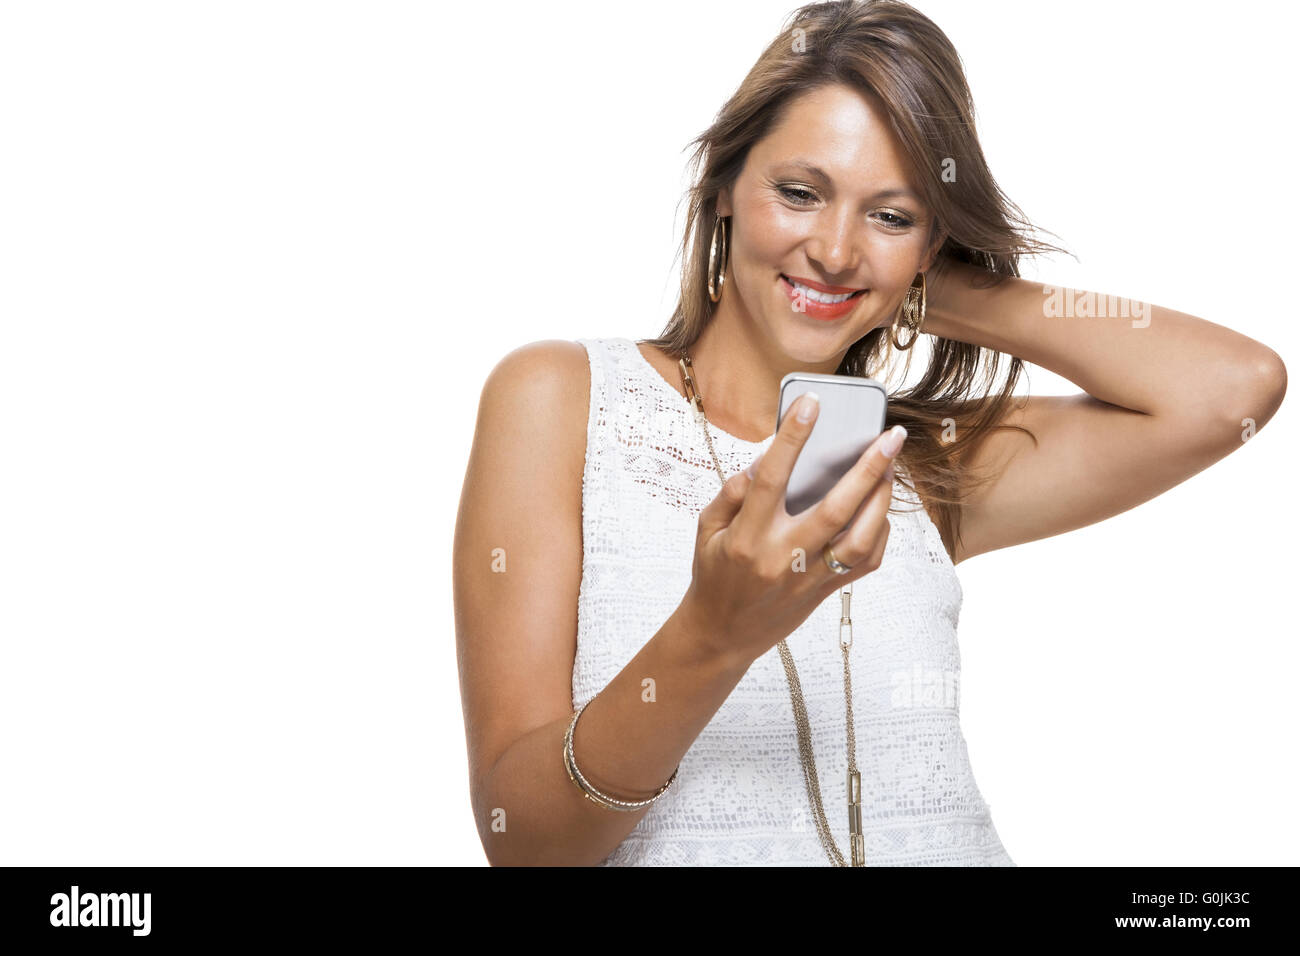 Vivacious woman reacting to a text message Stock Photo